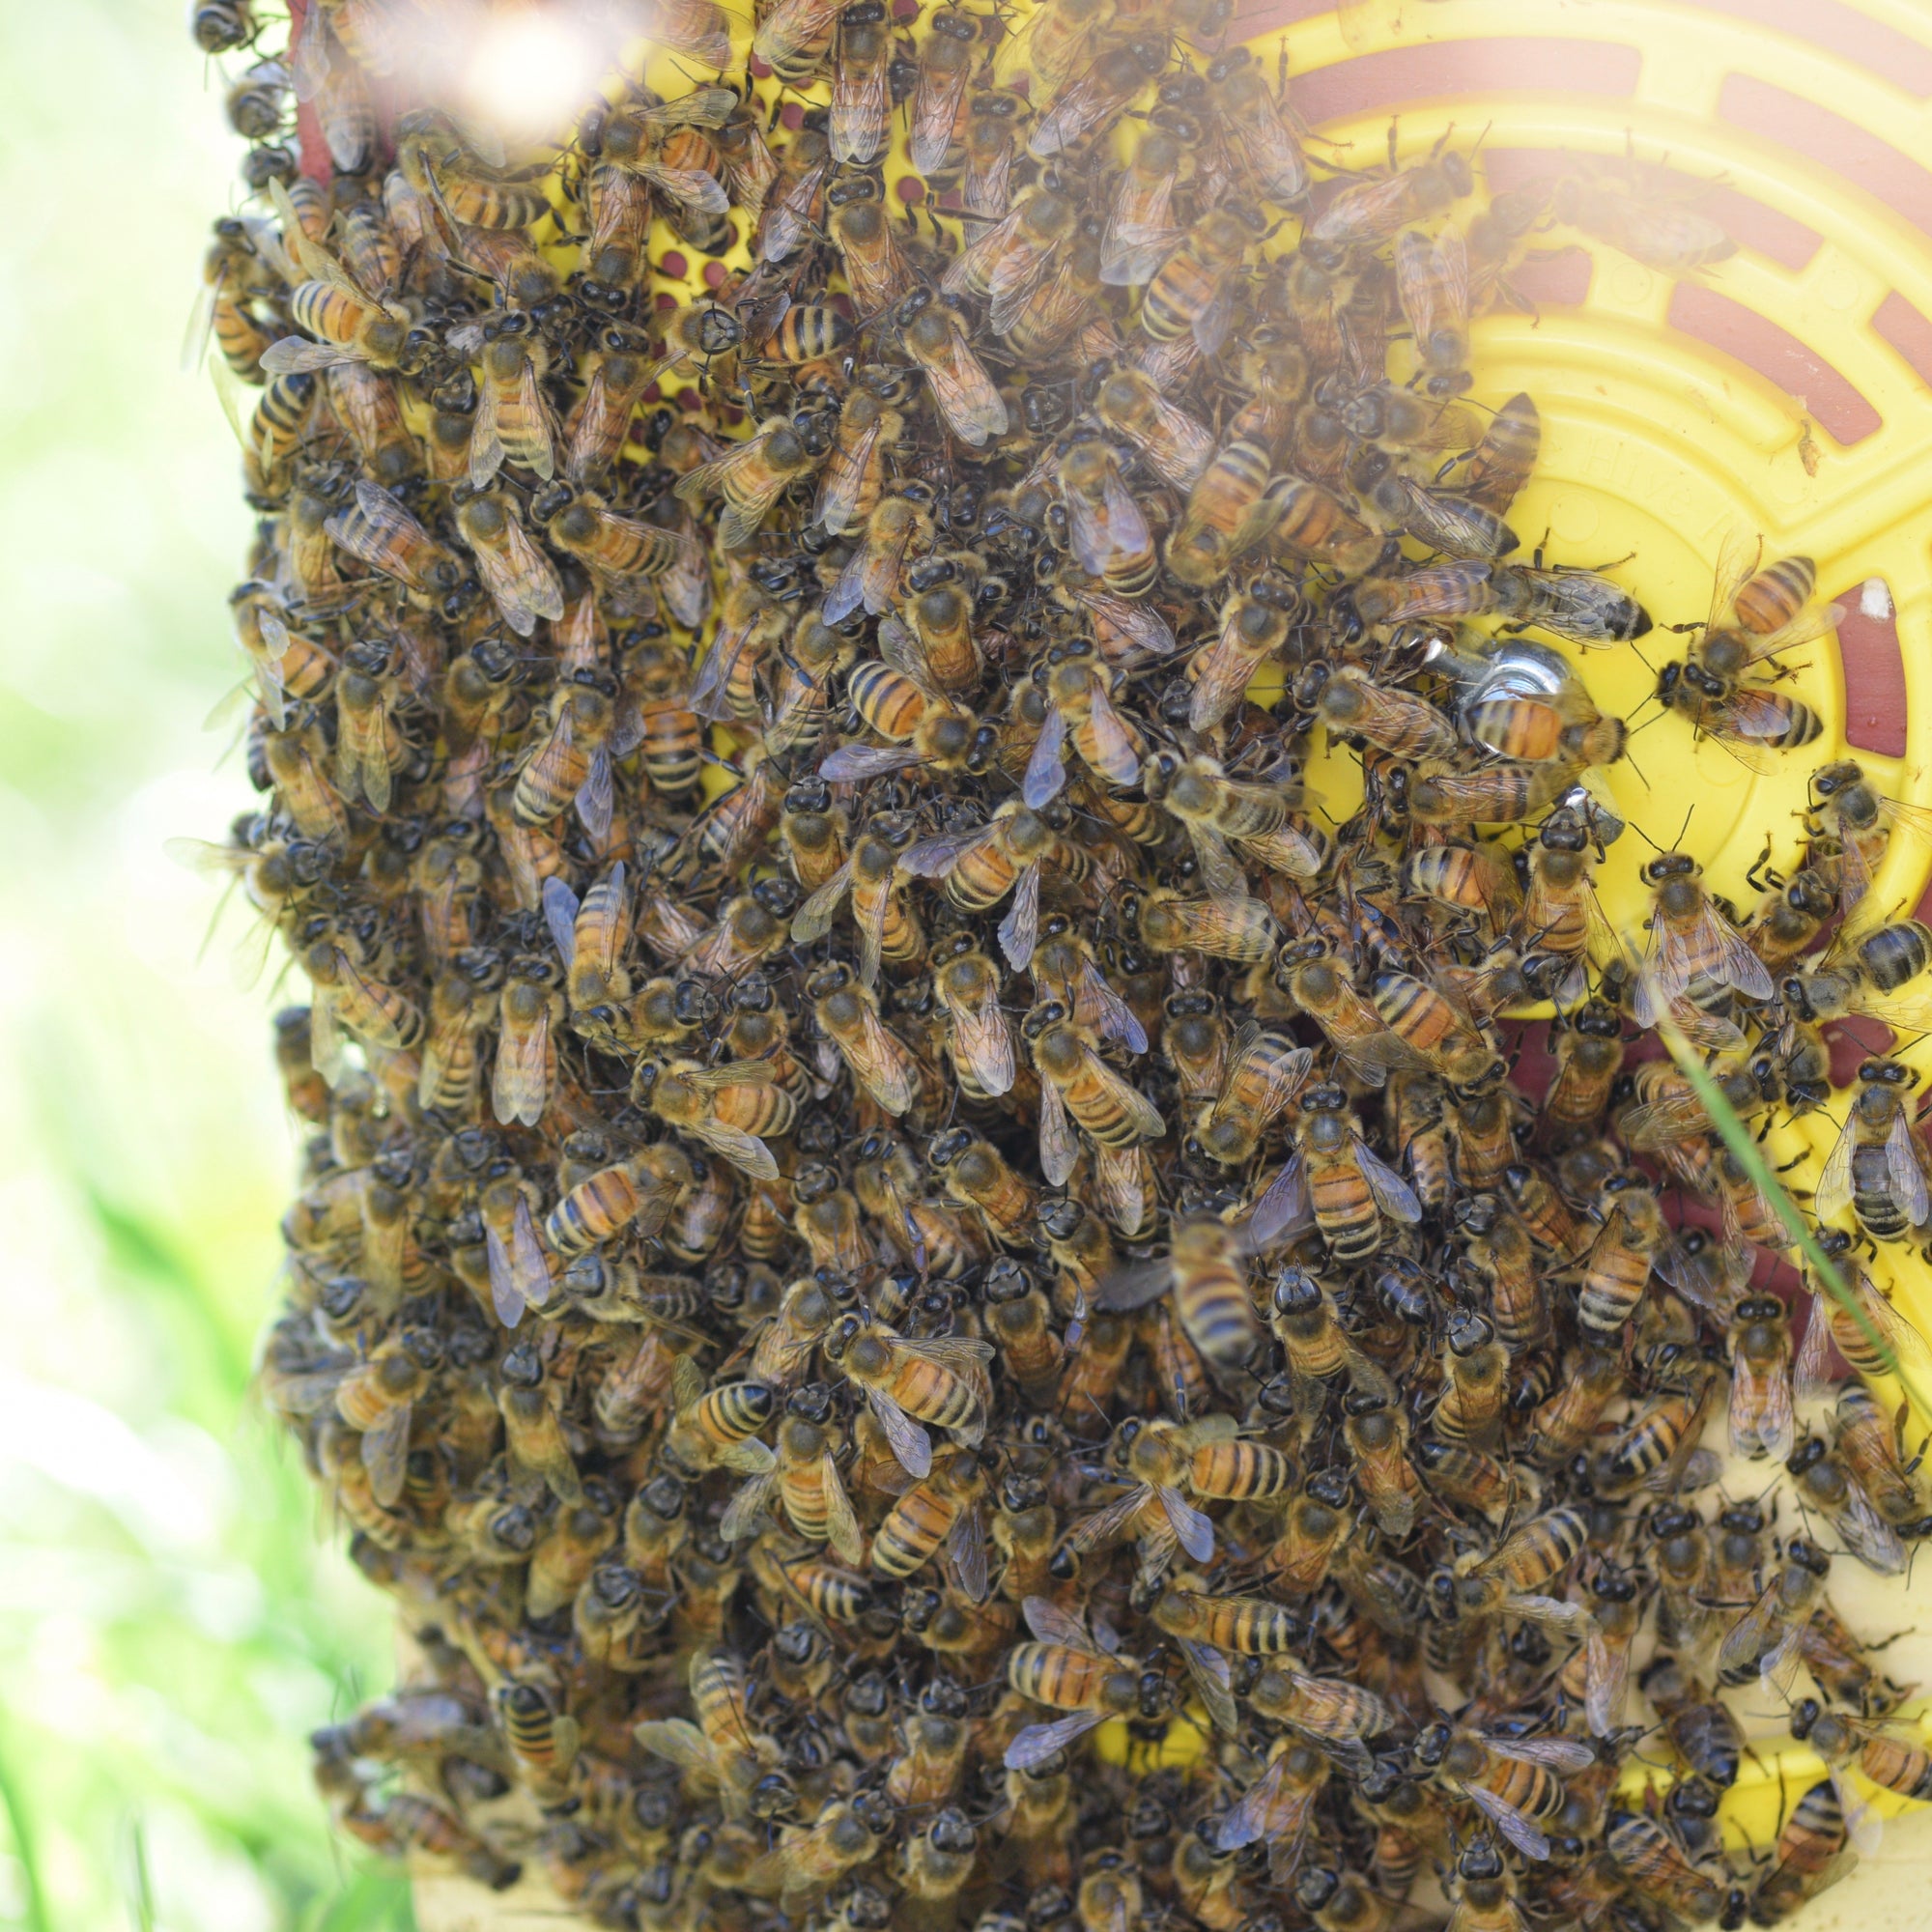 Treatment Free Beekeeping